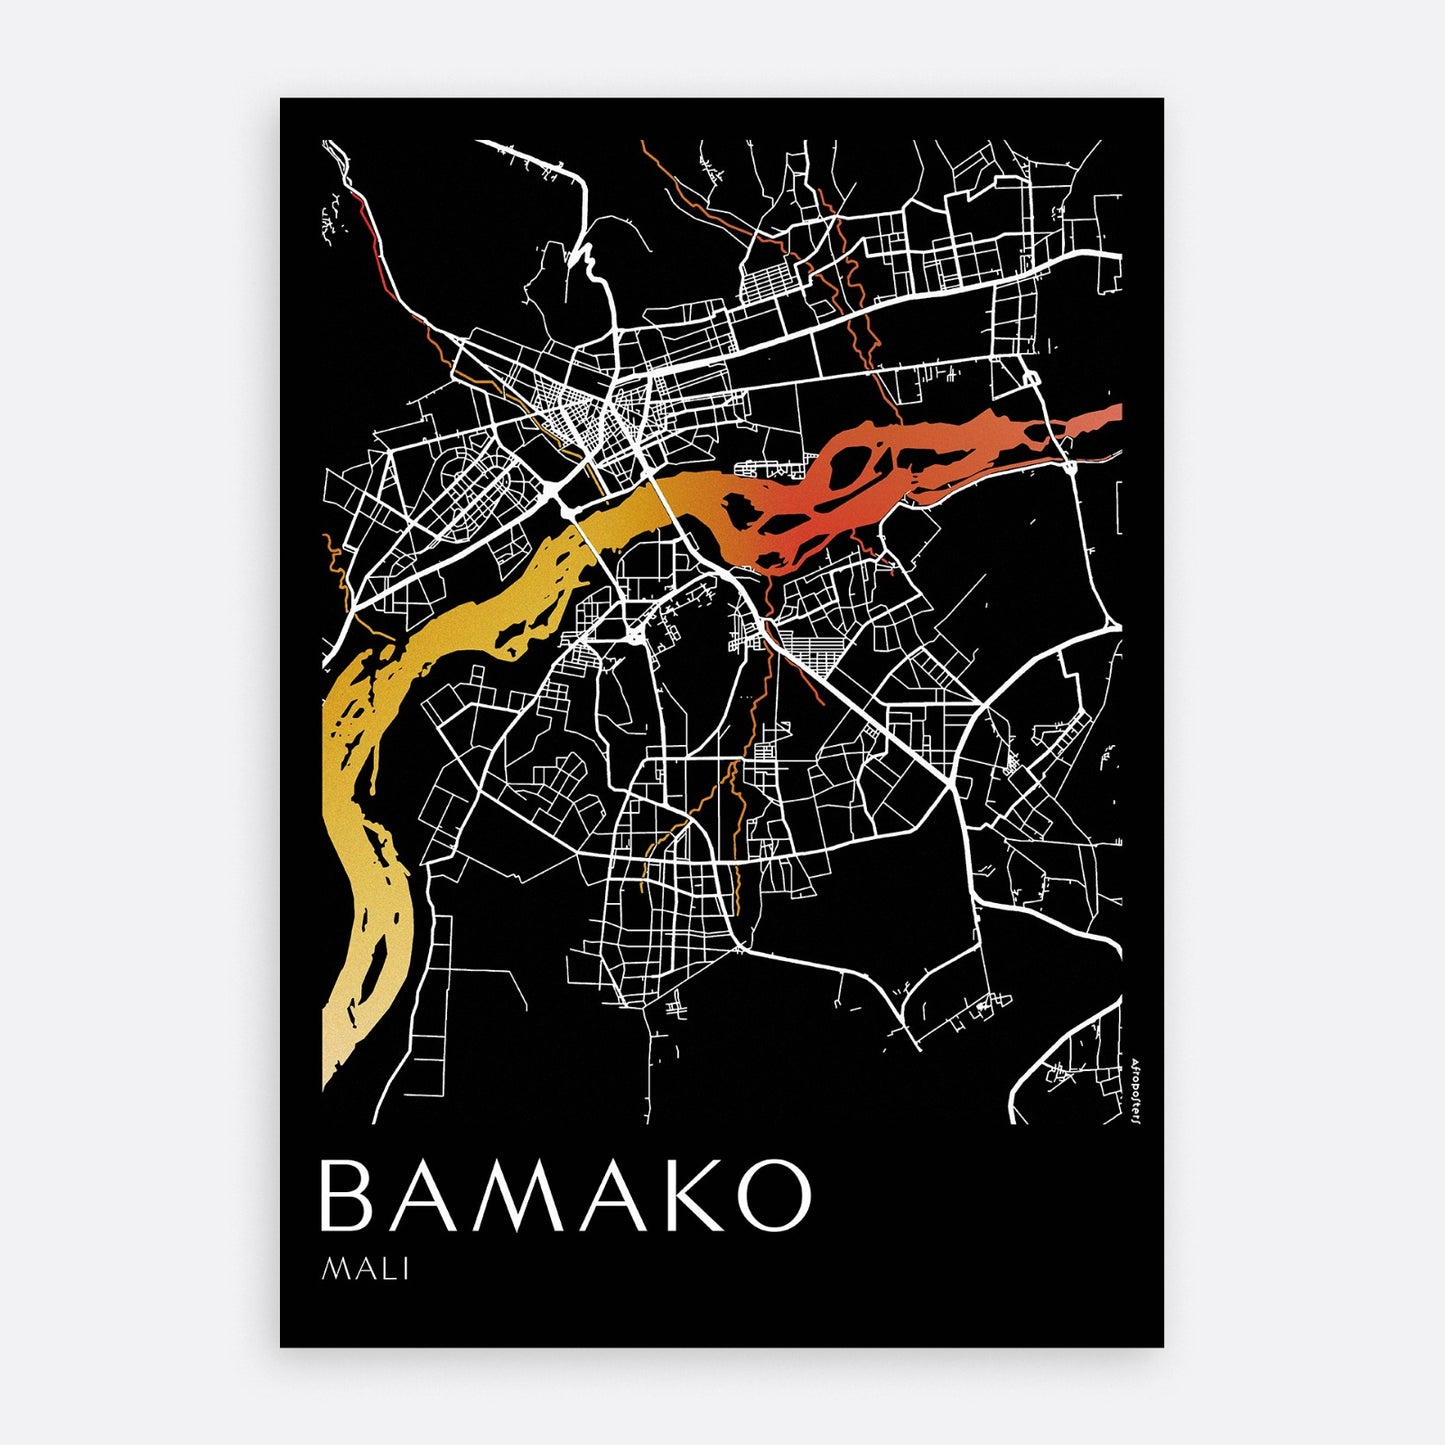 Bamako is Lava